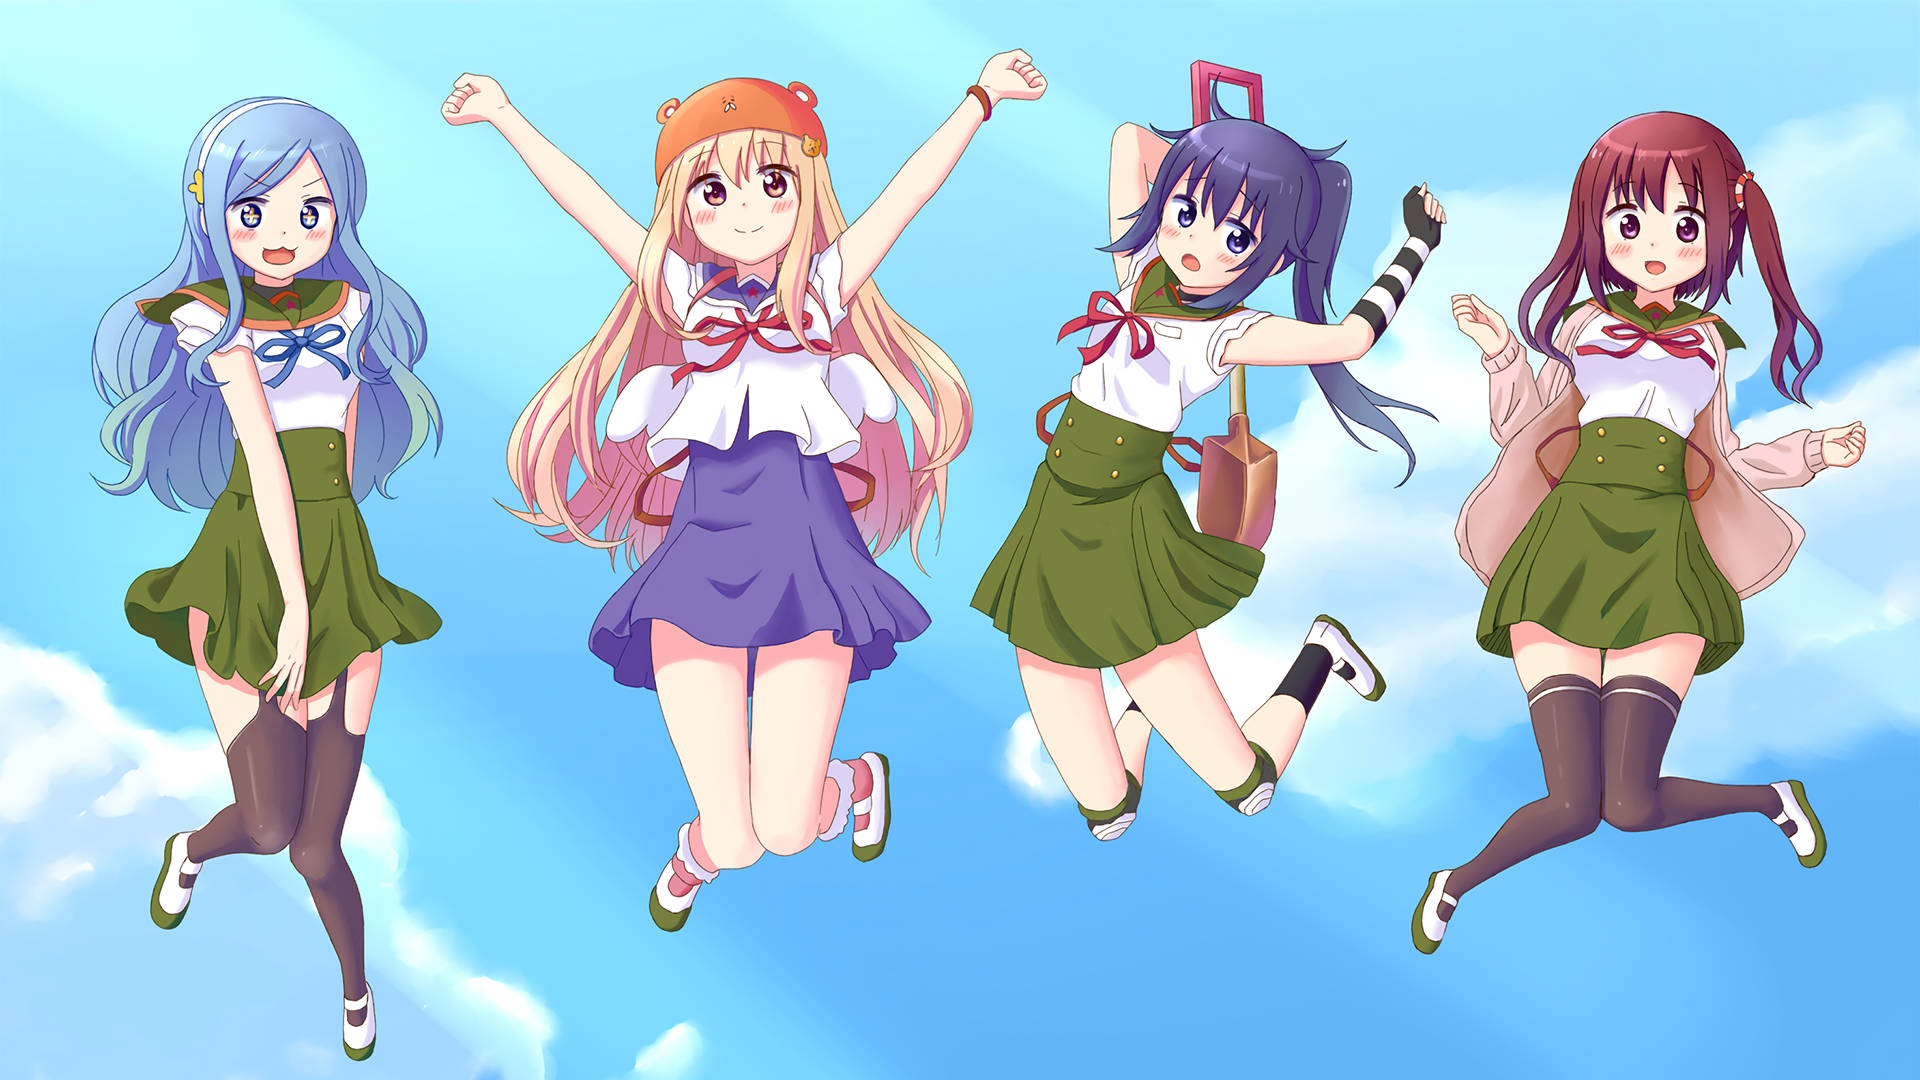 Anime Girls From Himouto! Umaru-chan Wallpaper